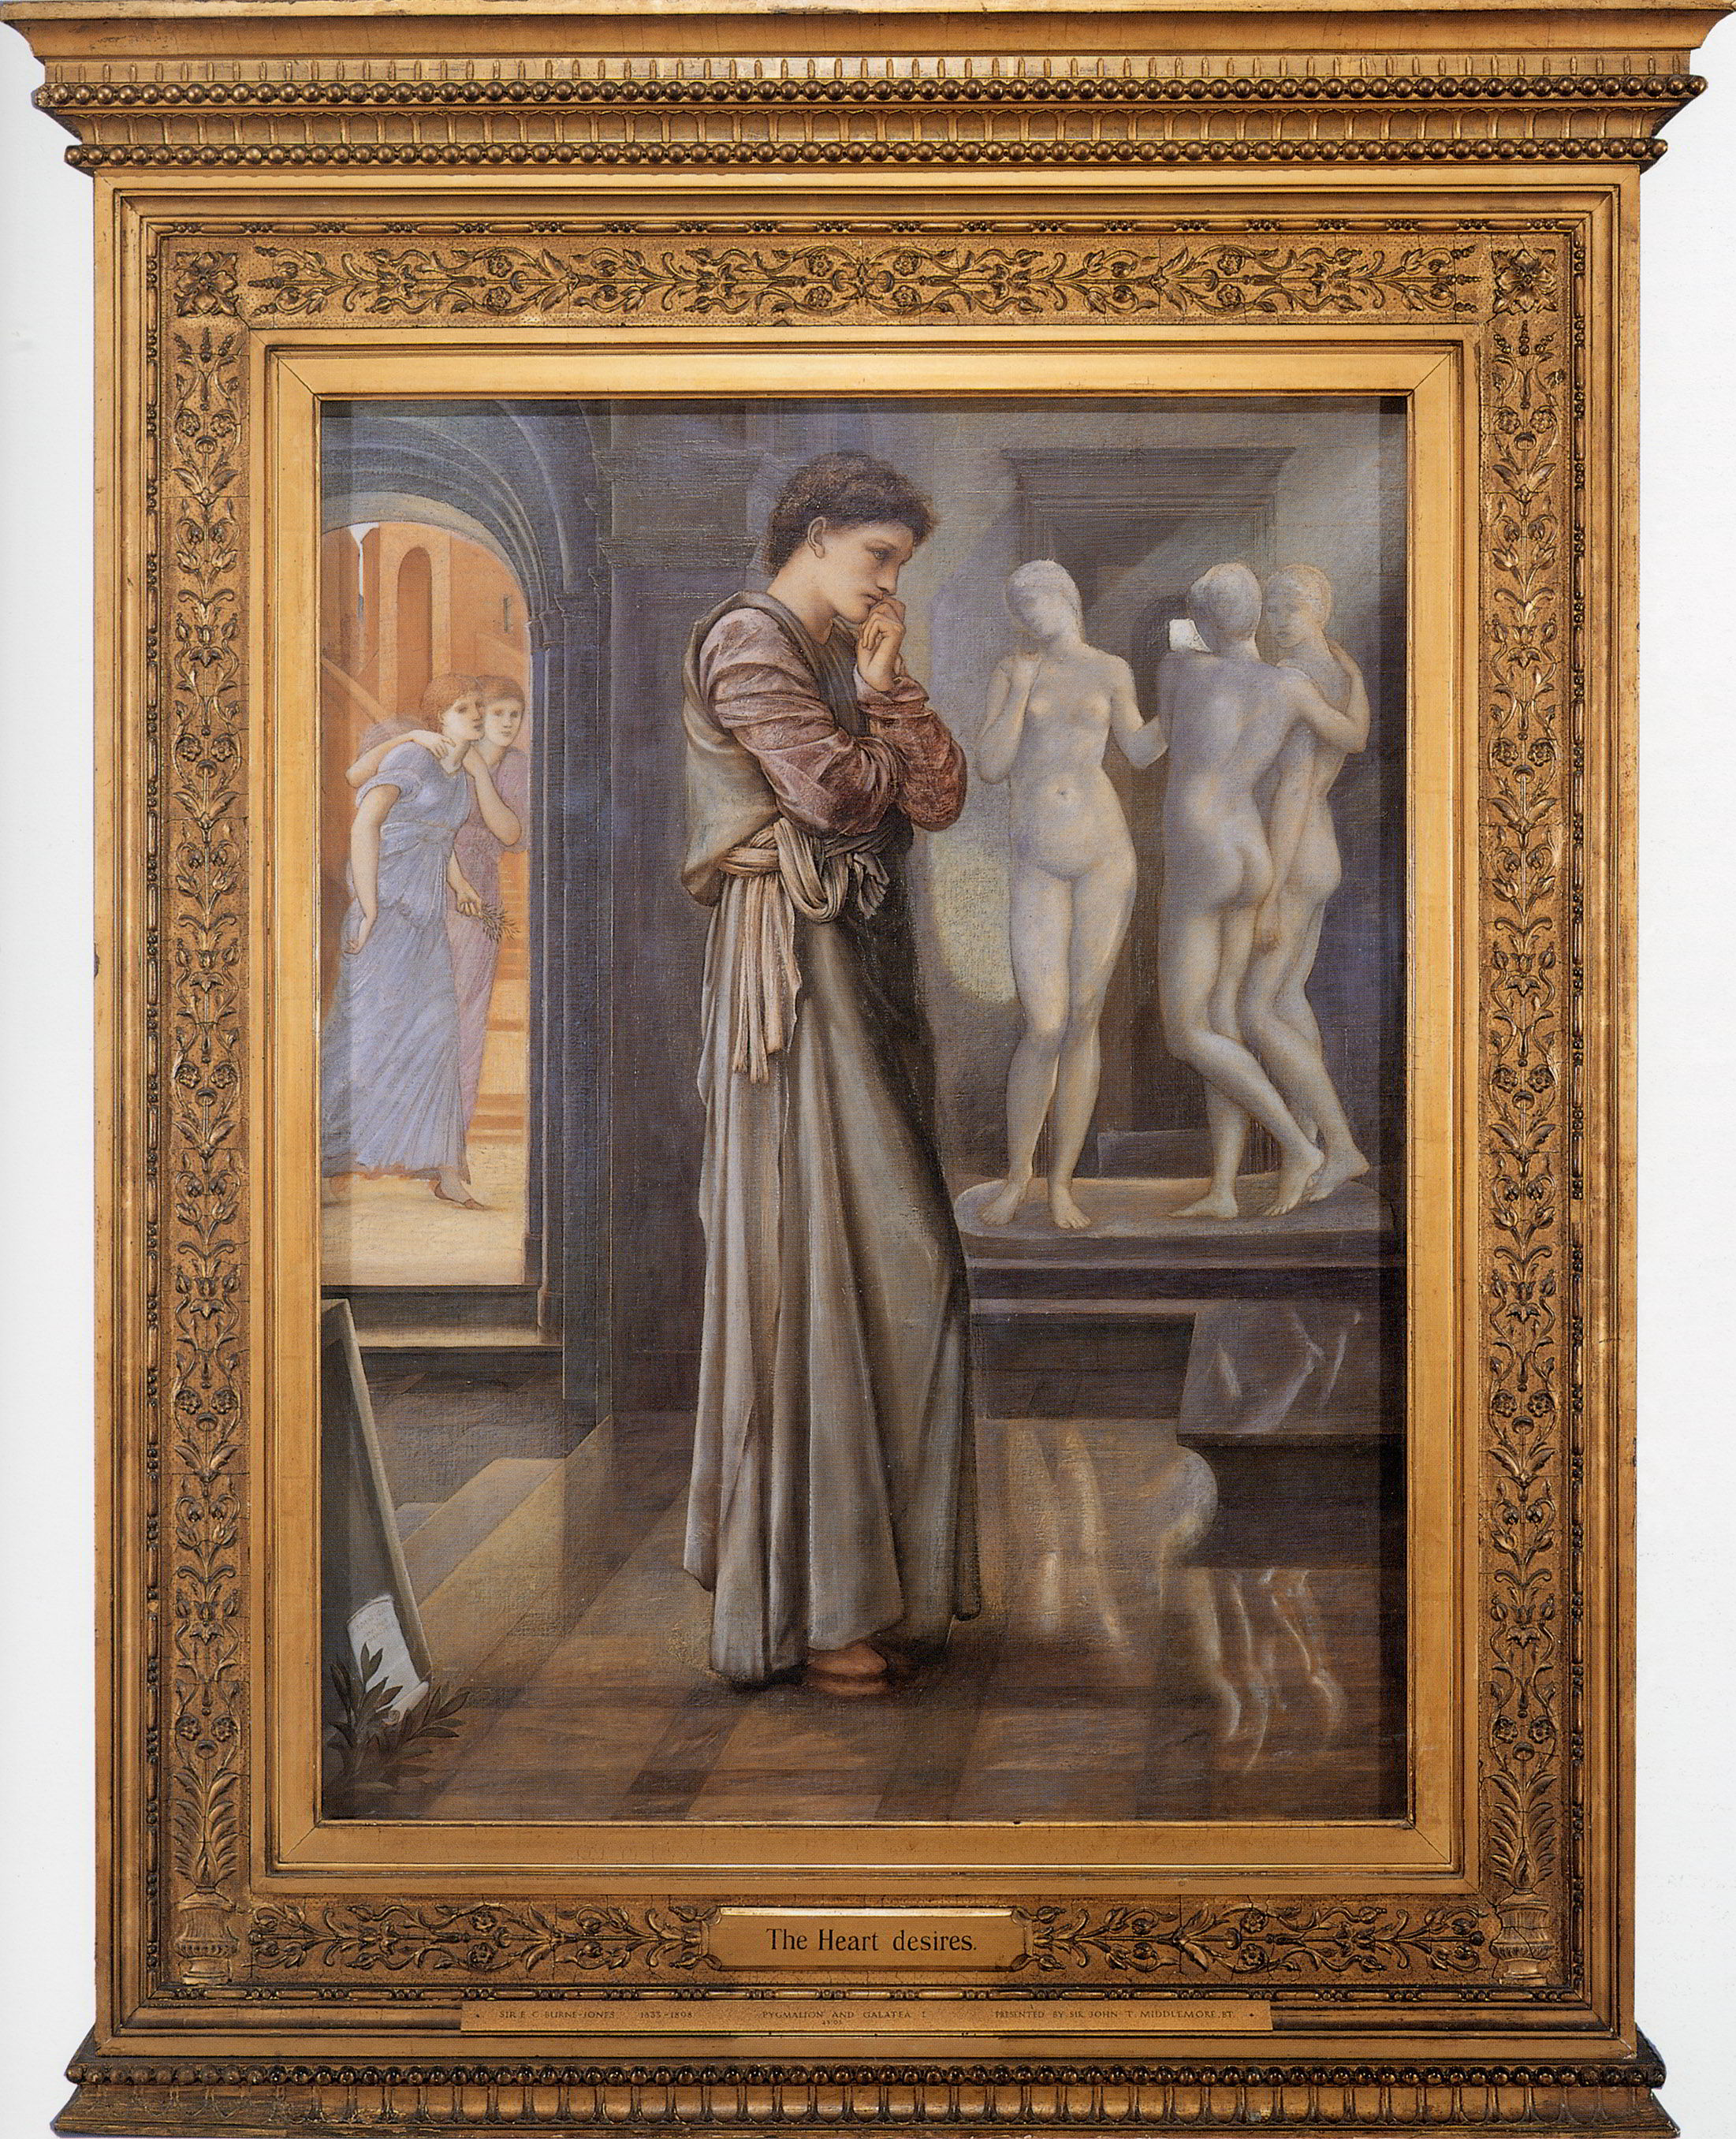 Pygmalion and the Image I  The Heart Desires by Edward Burne Jones